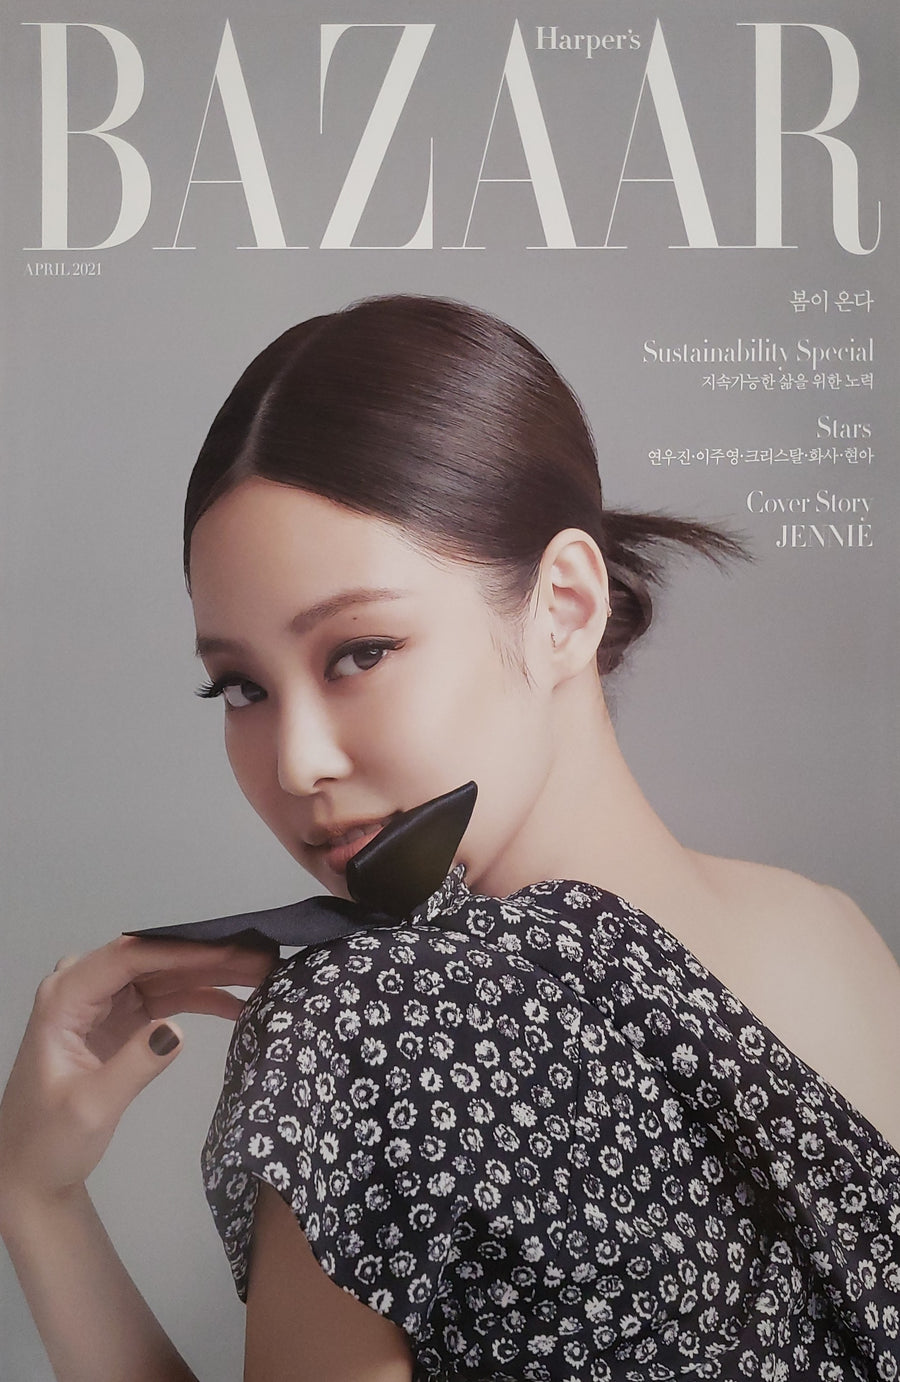 Bazaar Korea Magazine 04-2021 (Jennie) Official Poster - Photo Concept B